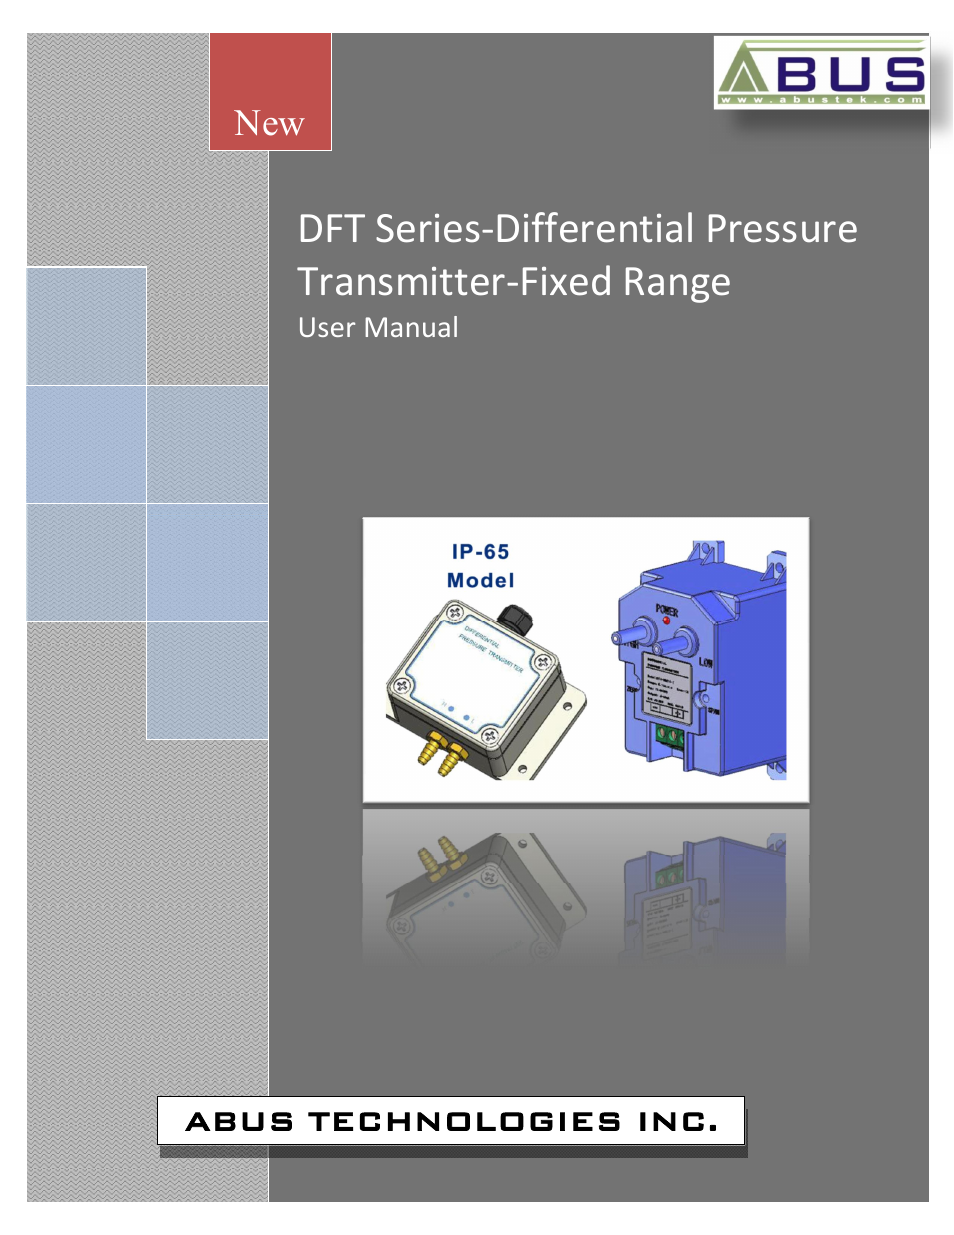 DFT Series Differential Pressure Transmitter